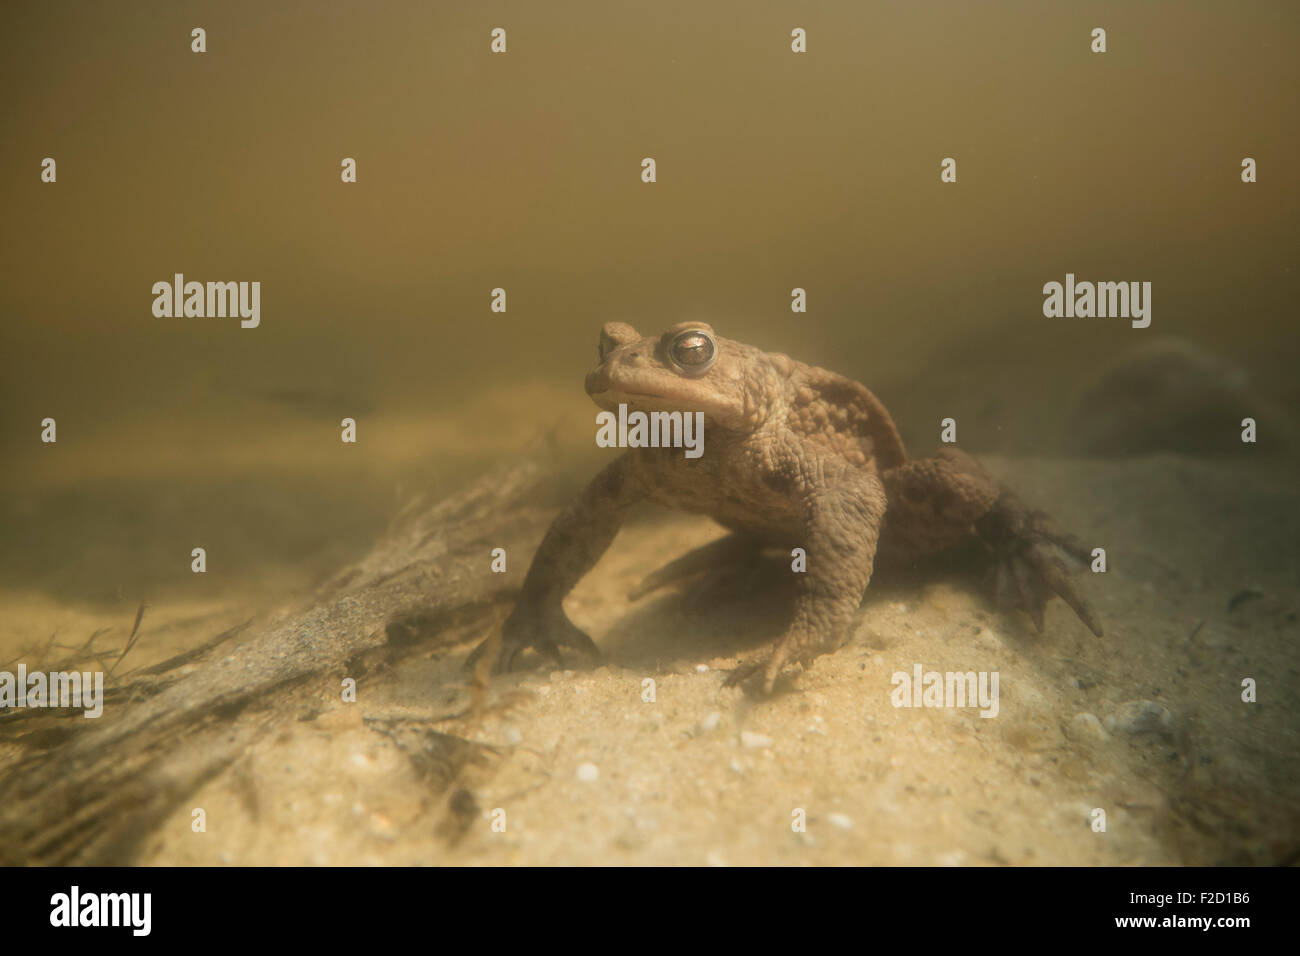 Bufo bufo / Common Toad / Crapaud commun / Erdkroete under water during their breeding season. Stock Photo